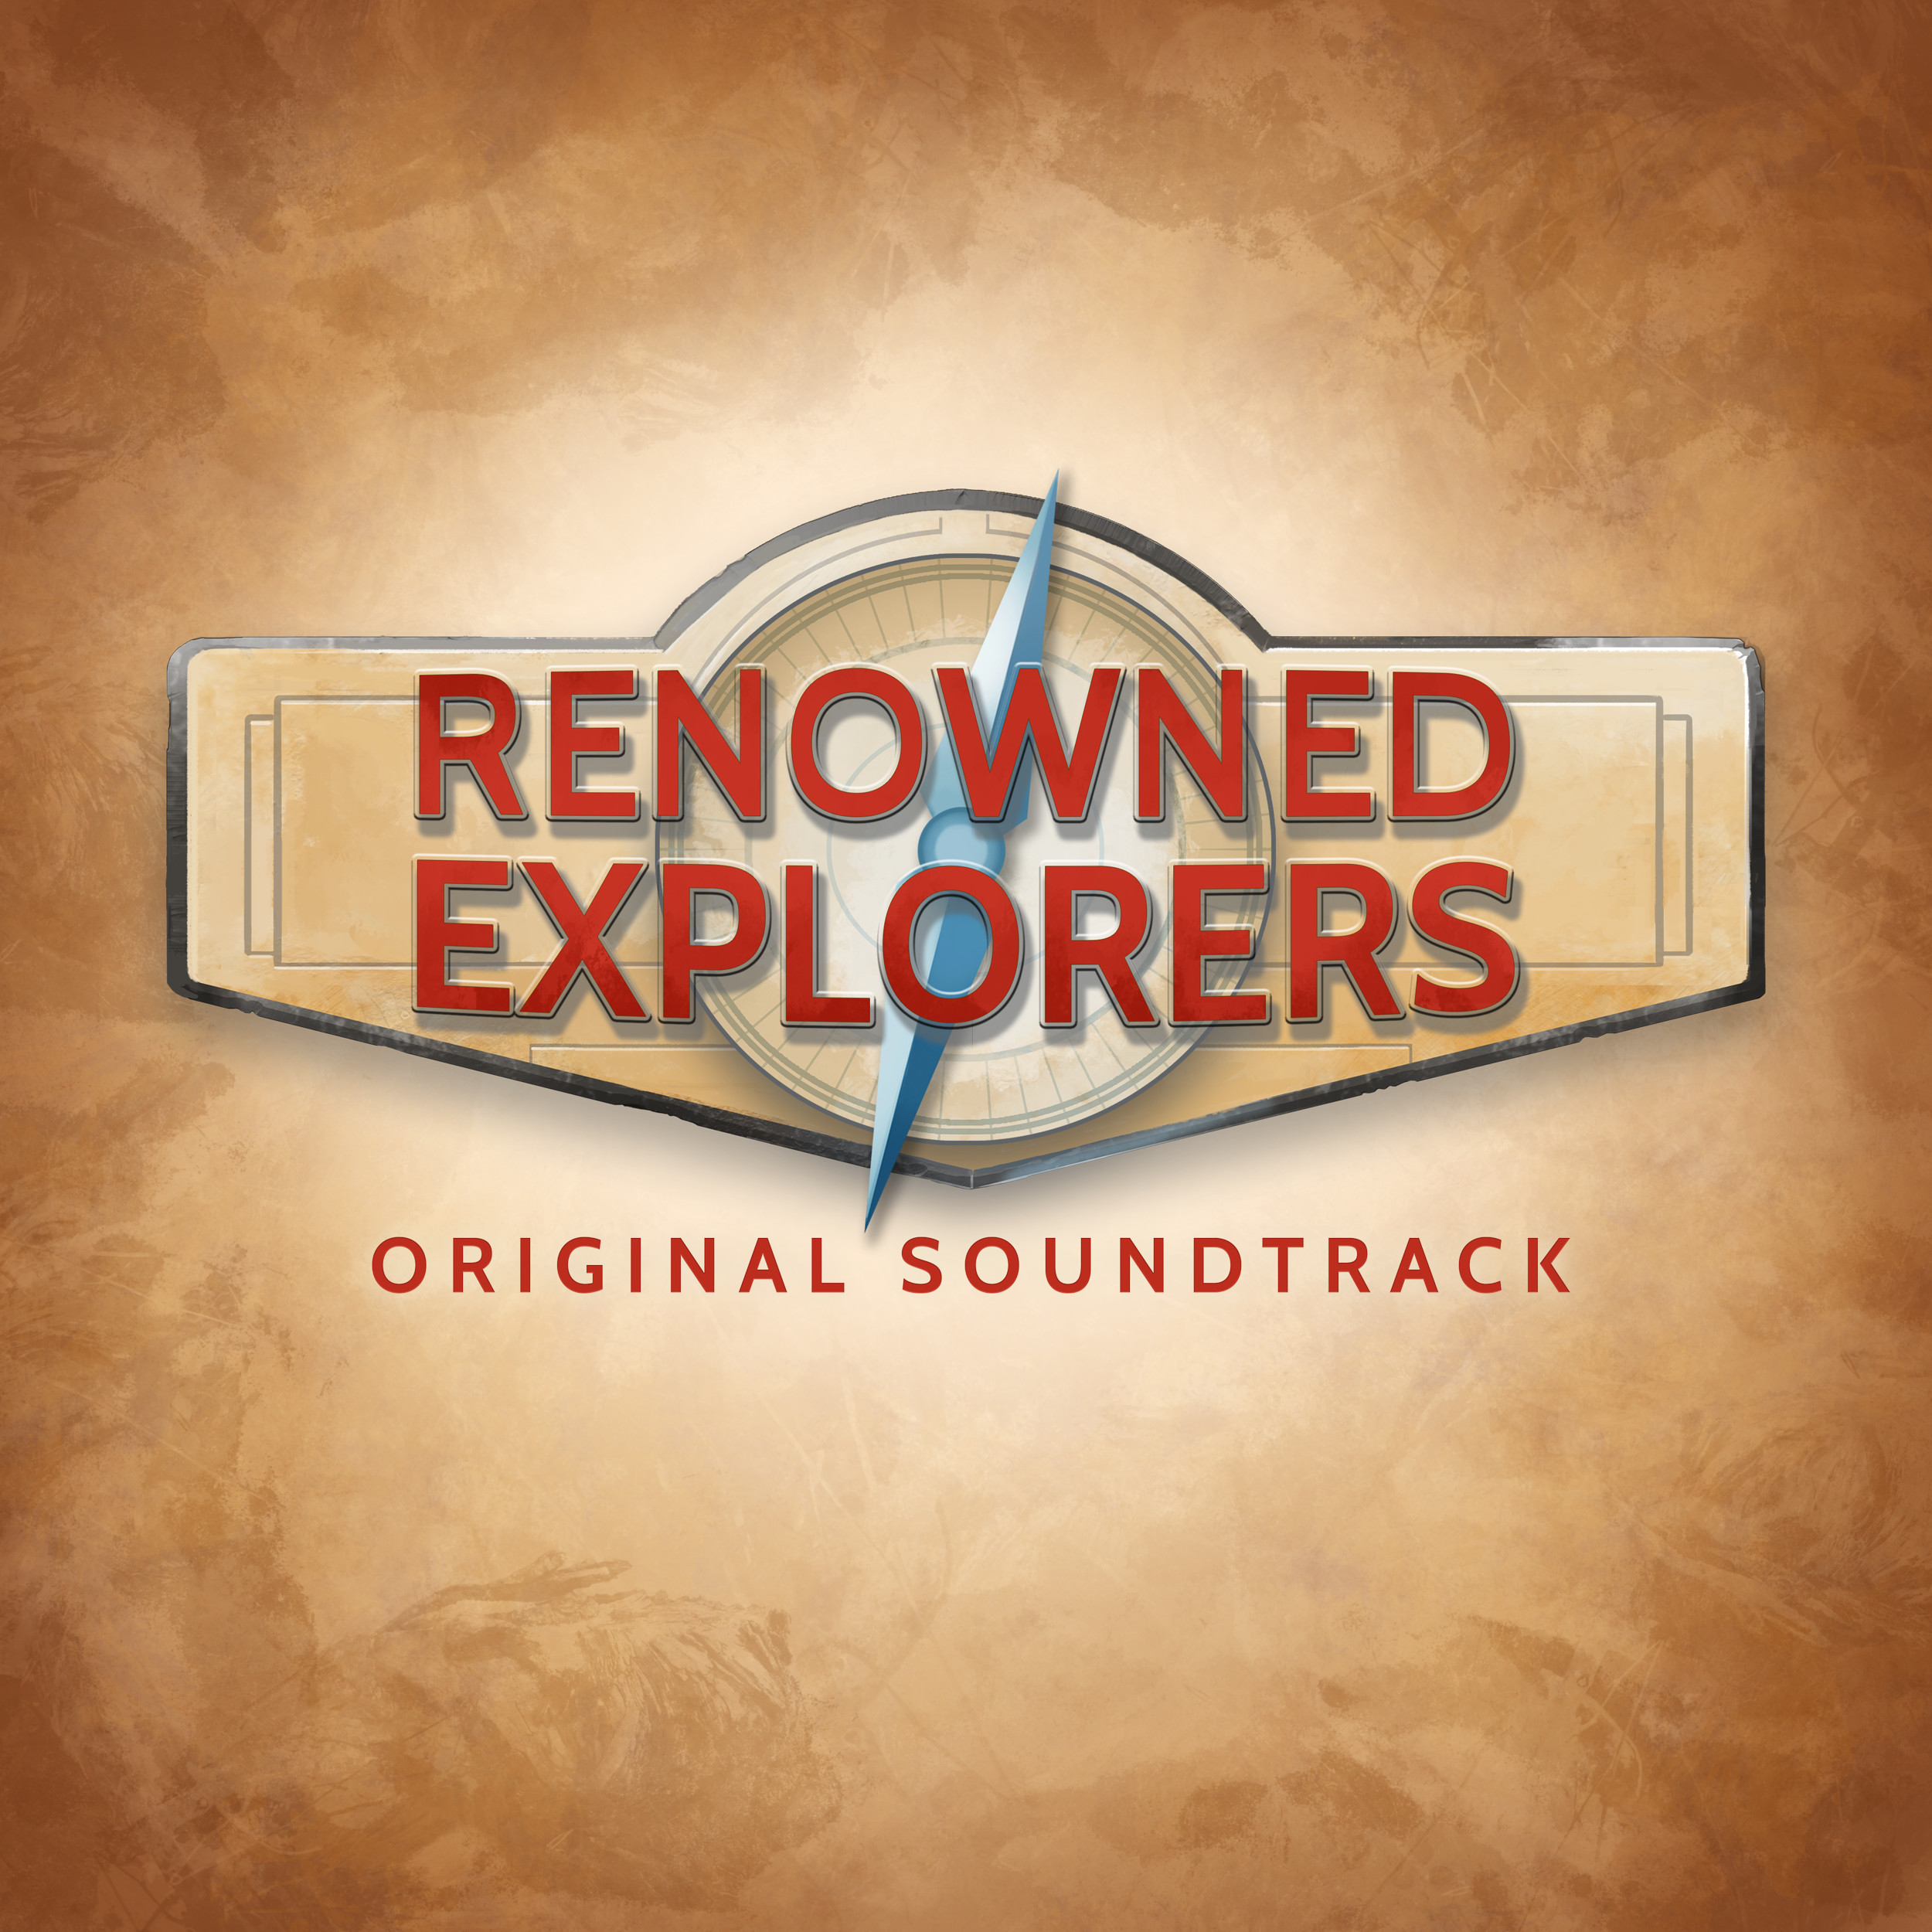 Renowned Explorers - Soundtrack screenshot